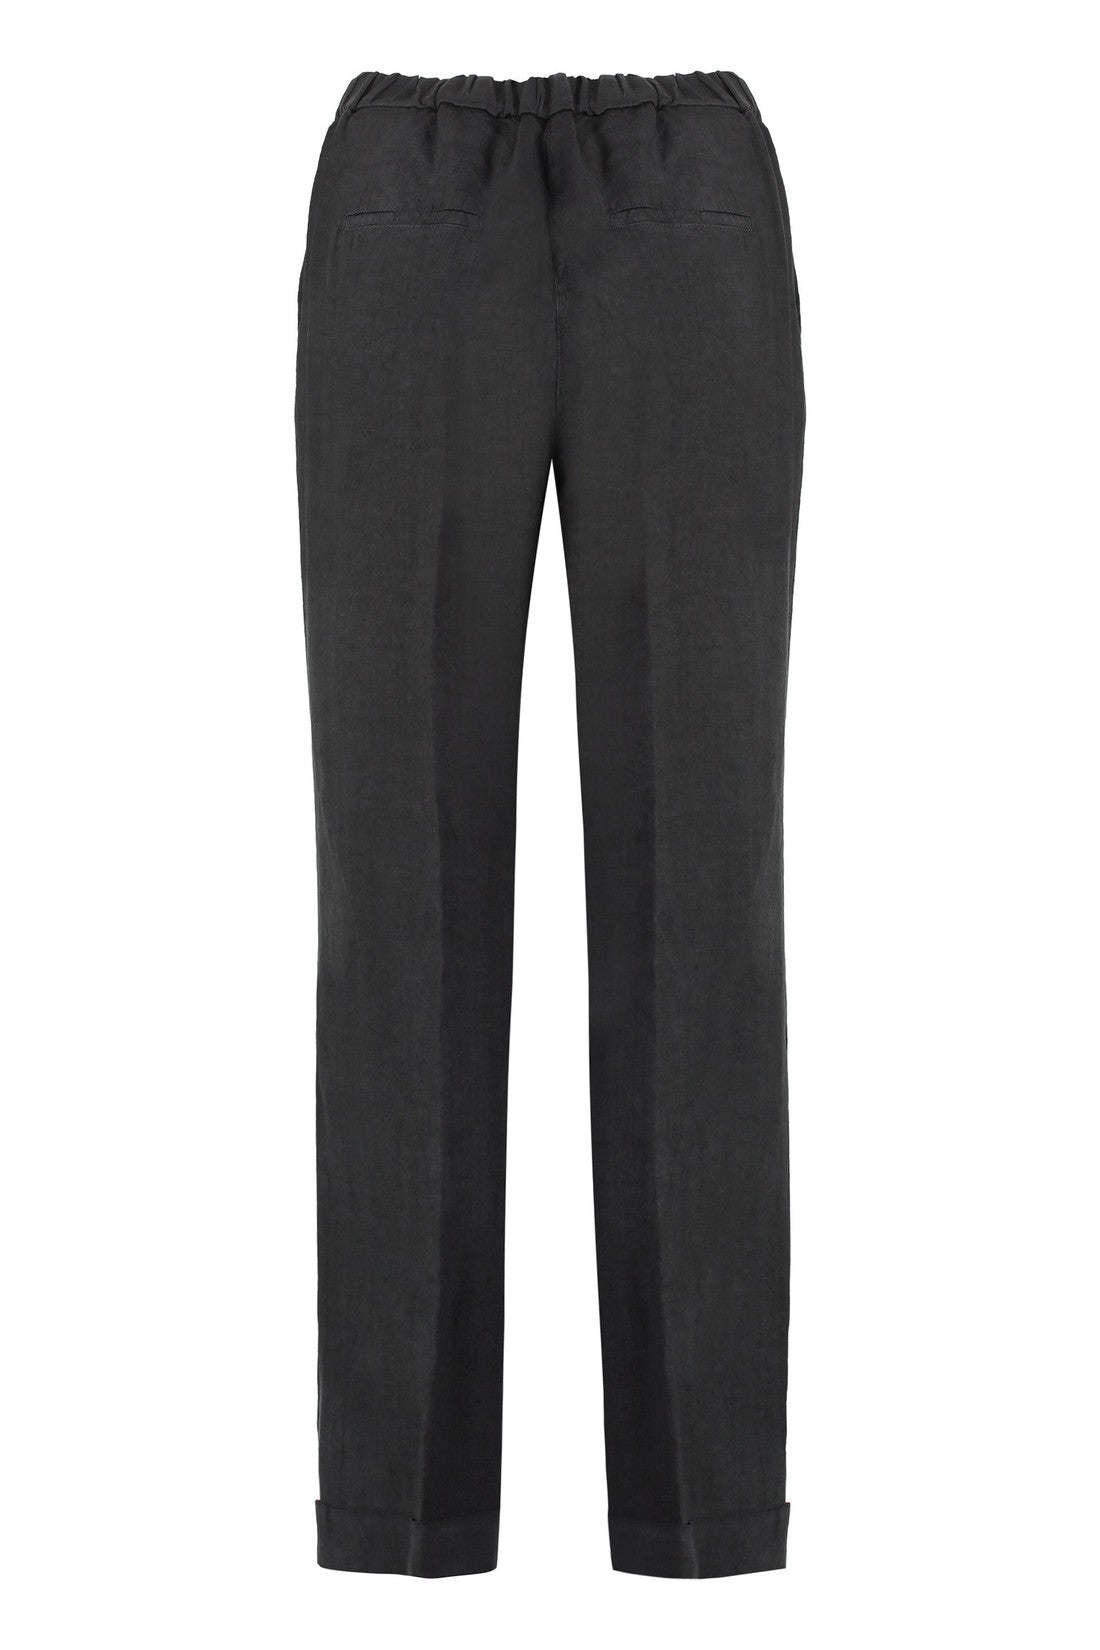 Peserico-OUTLET-SALE-Linen trousers-ARCHIVIST